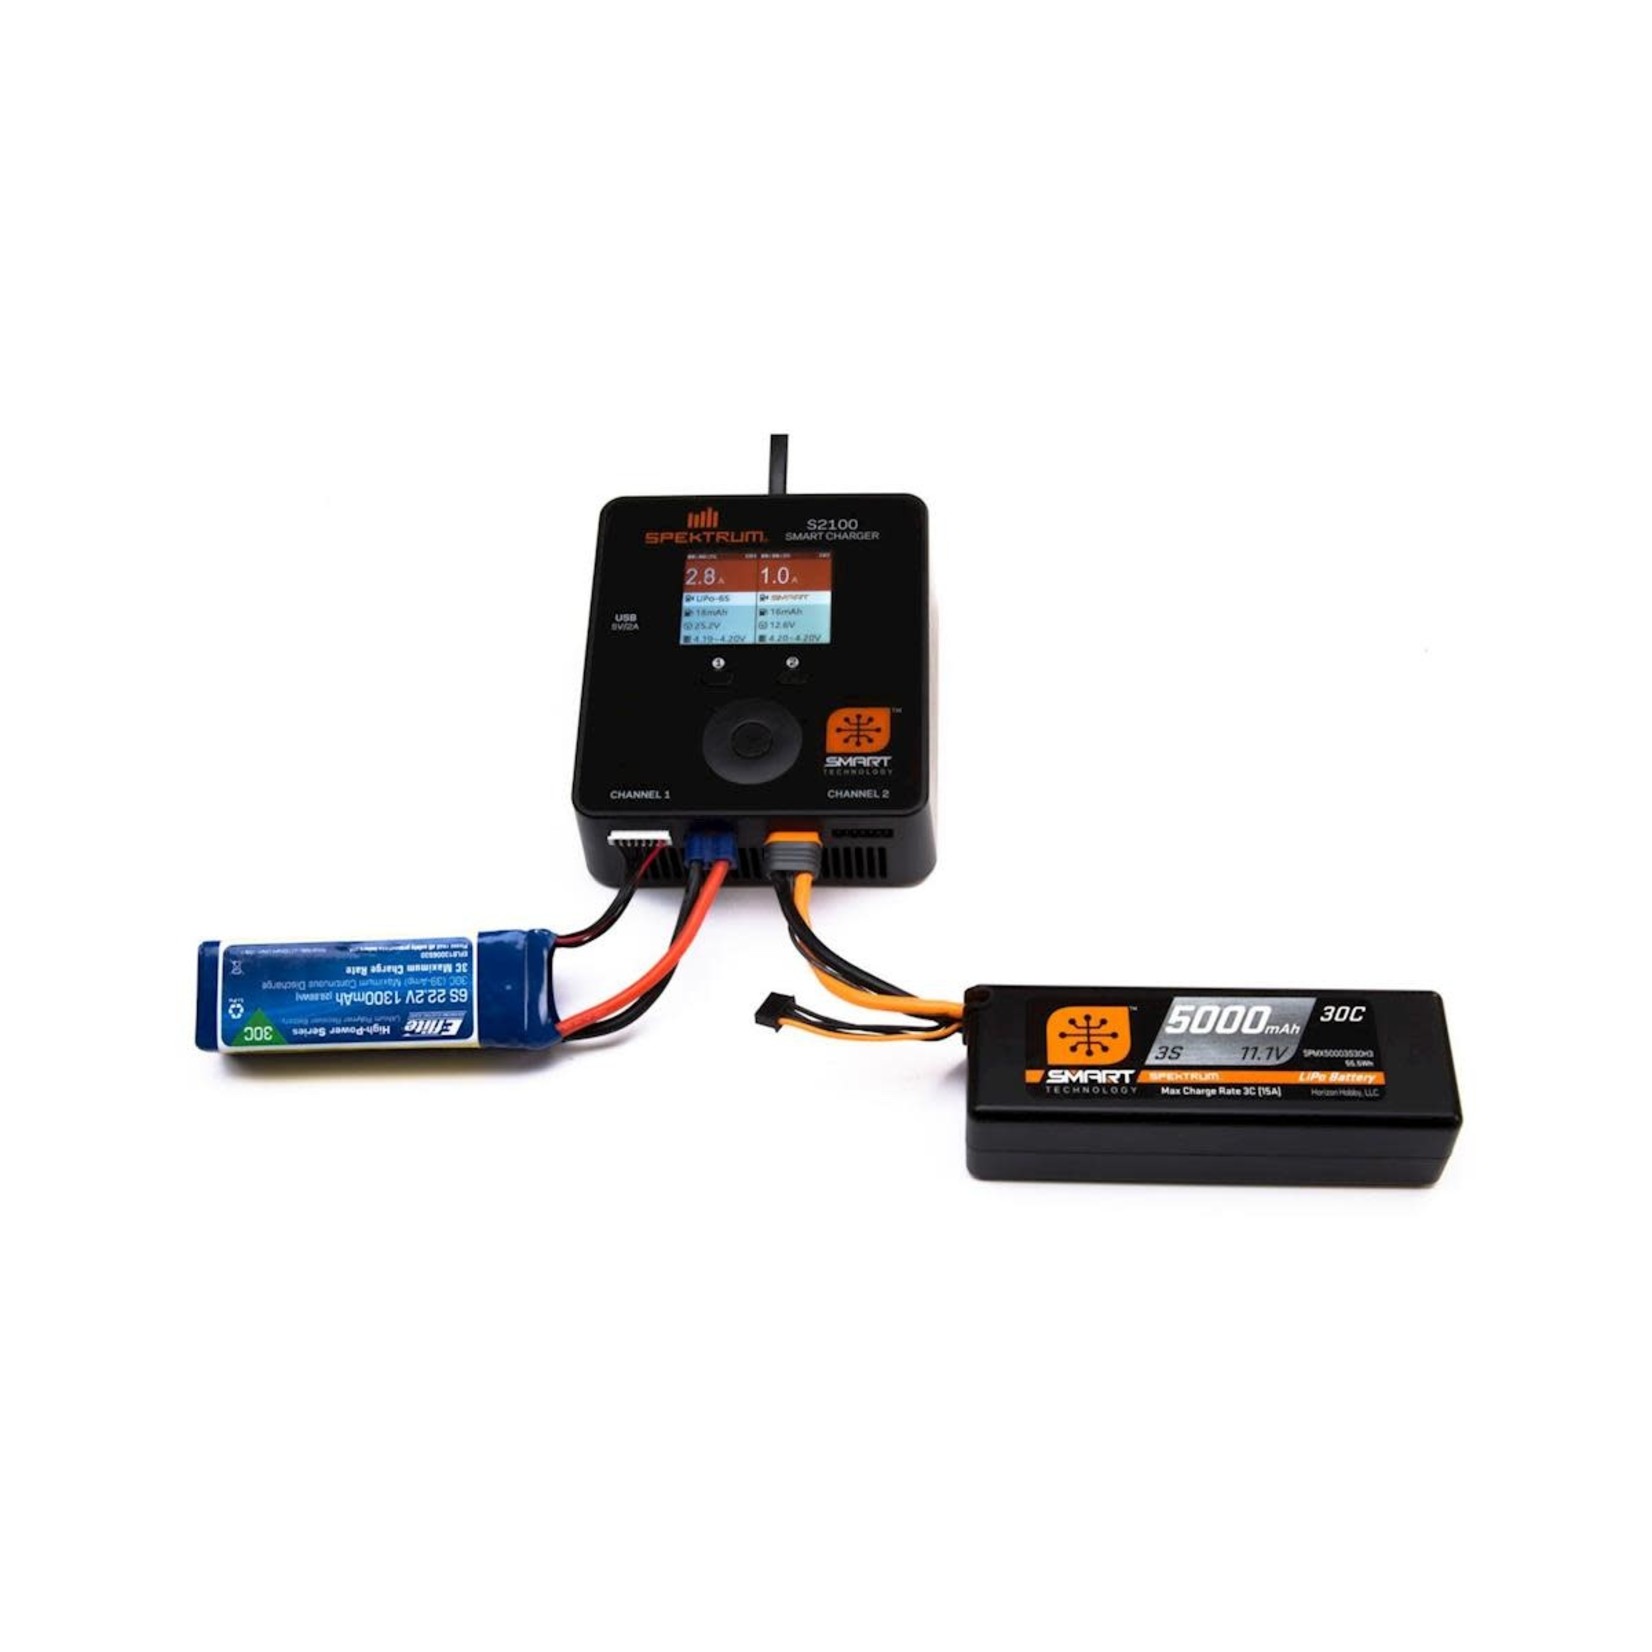 Spektrum Spektrum RC 2S Smart LiPo Hard Case Battery Pack w/IC5 Connector (7.4V/5000mAh) #SPMX50002S30H5